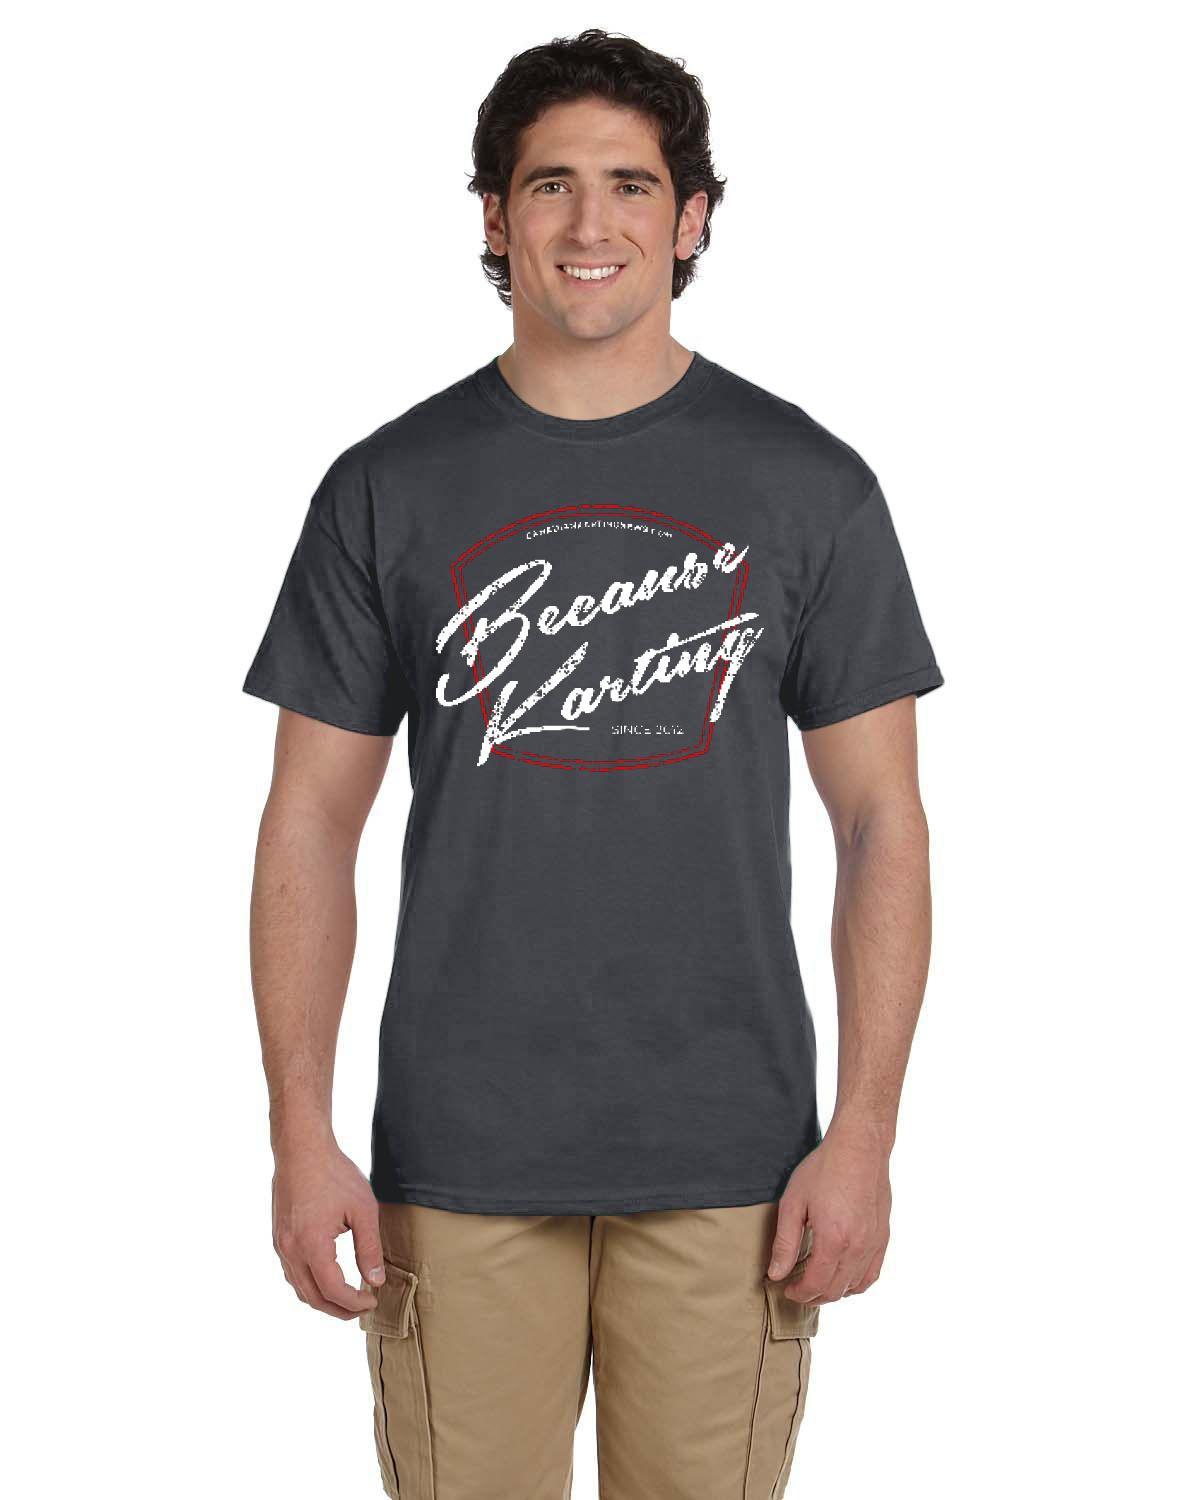 Canadian Karting News Men's T-Shirt (S-XL)